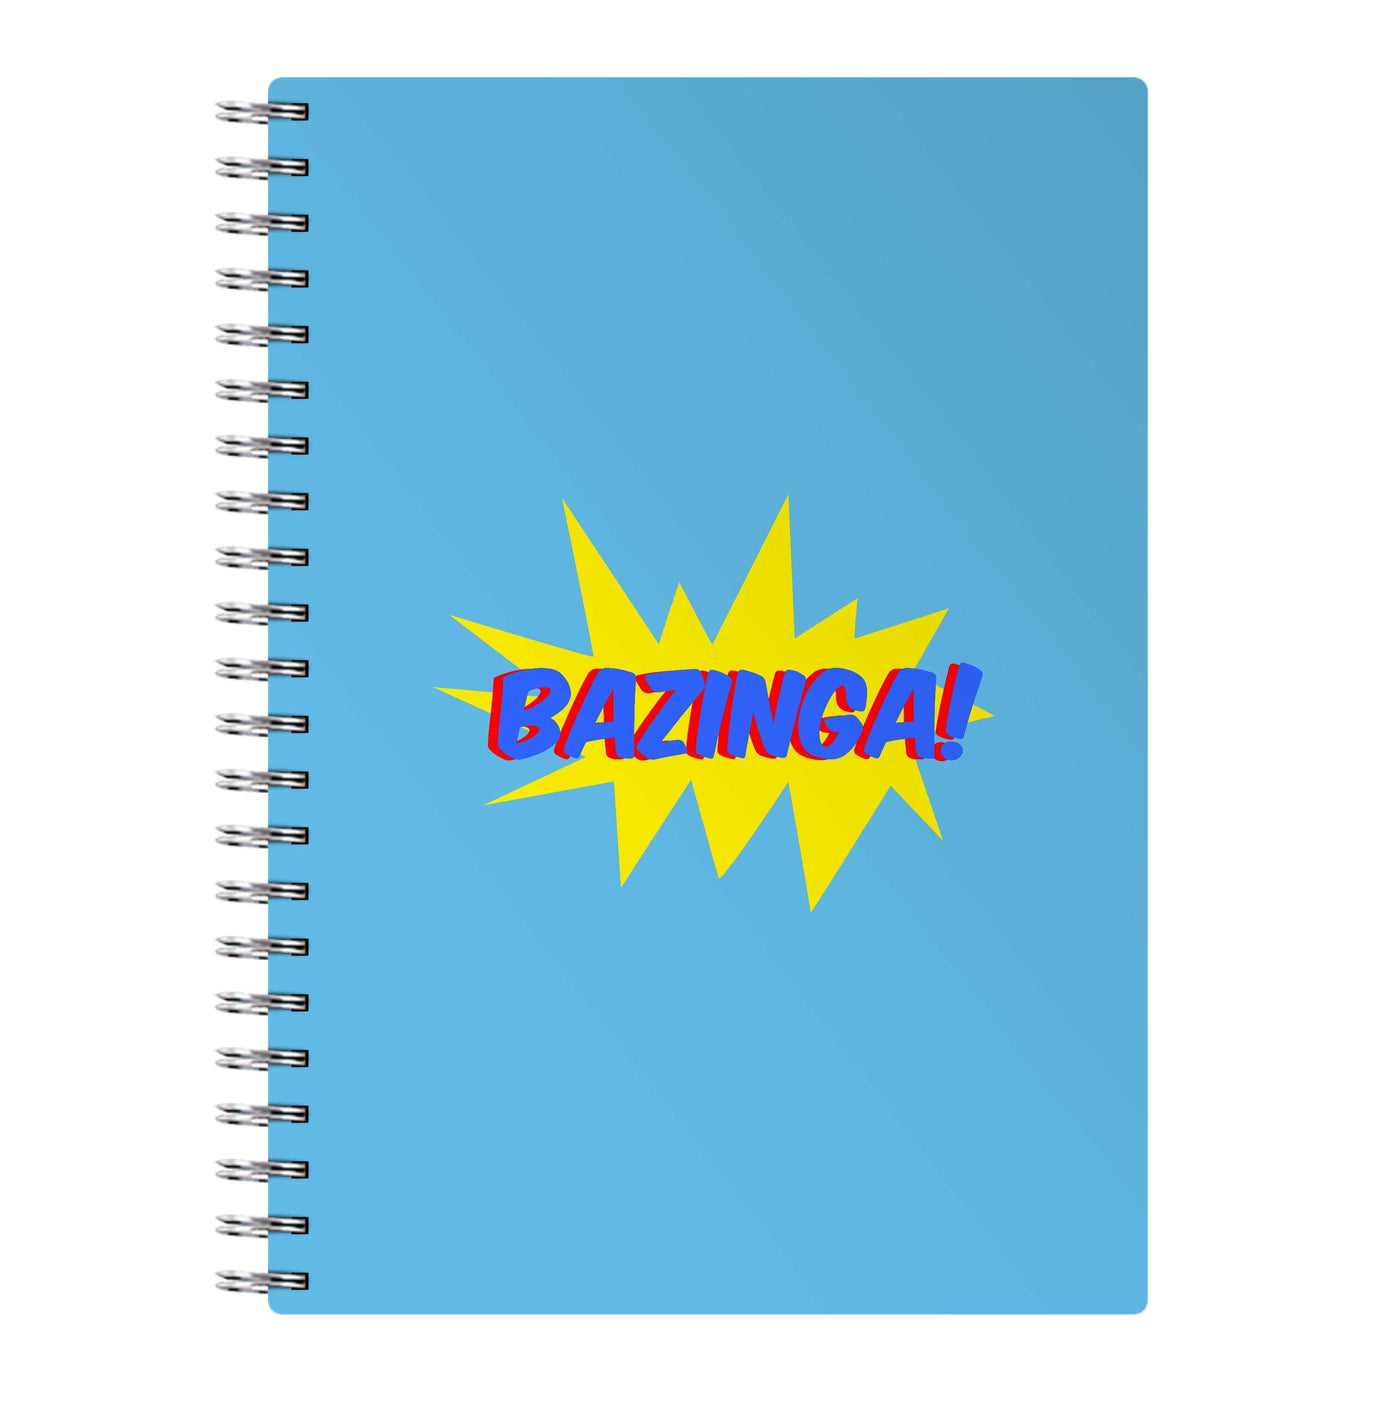 Bazinga! - TV Quotes Notebook